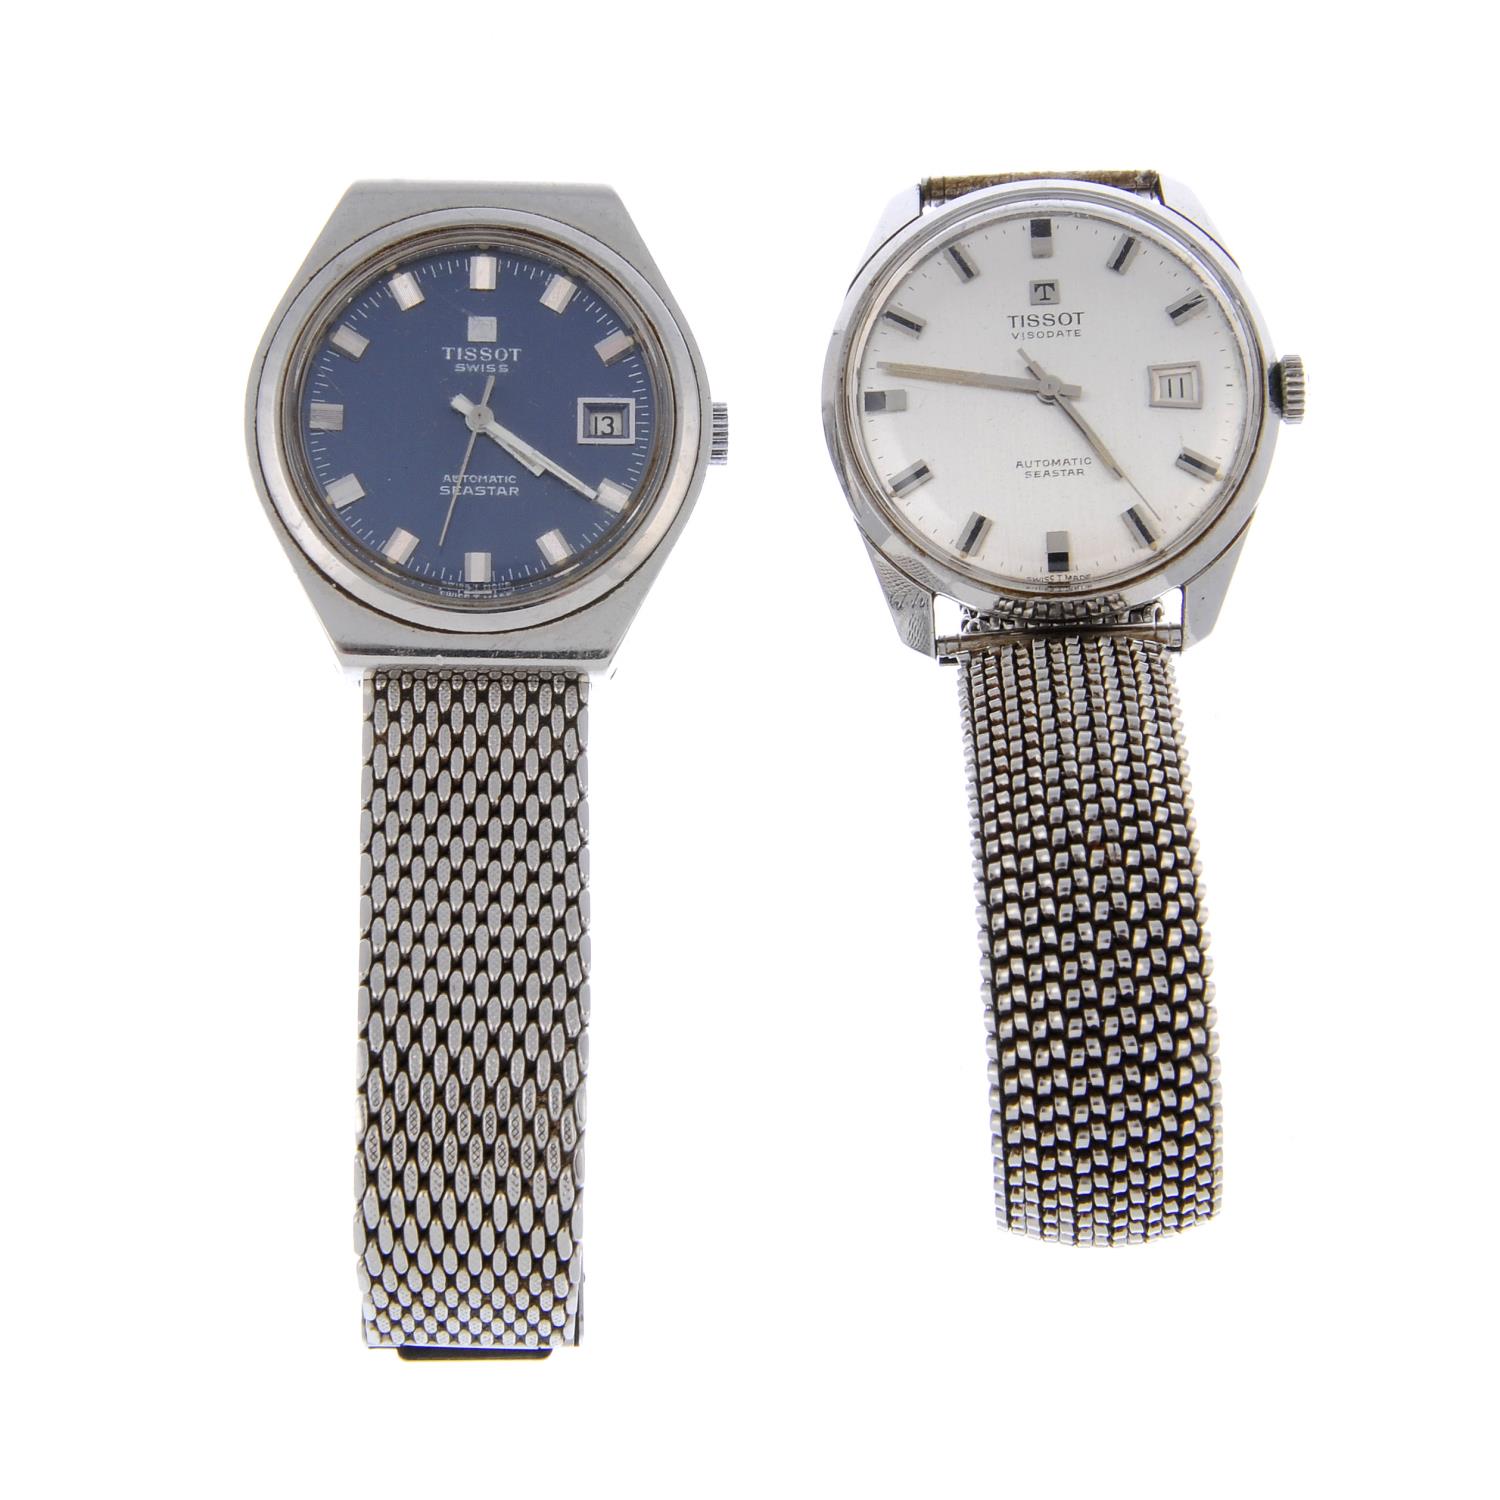 TISSOT - a gentleman's Seastar bracelet watch.